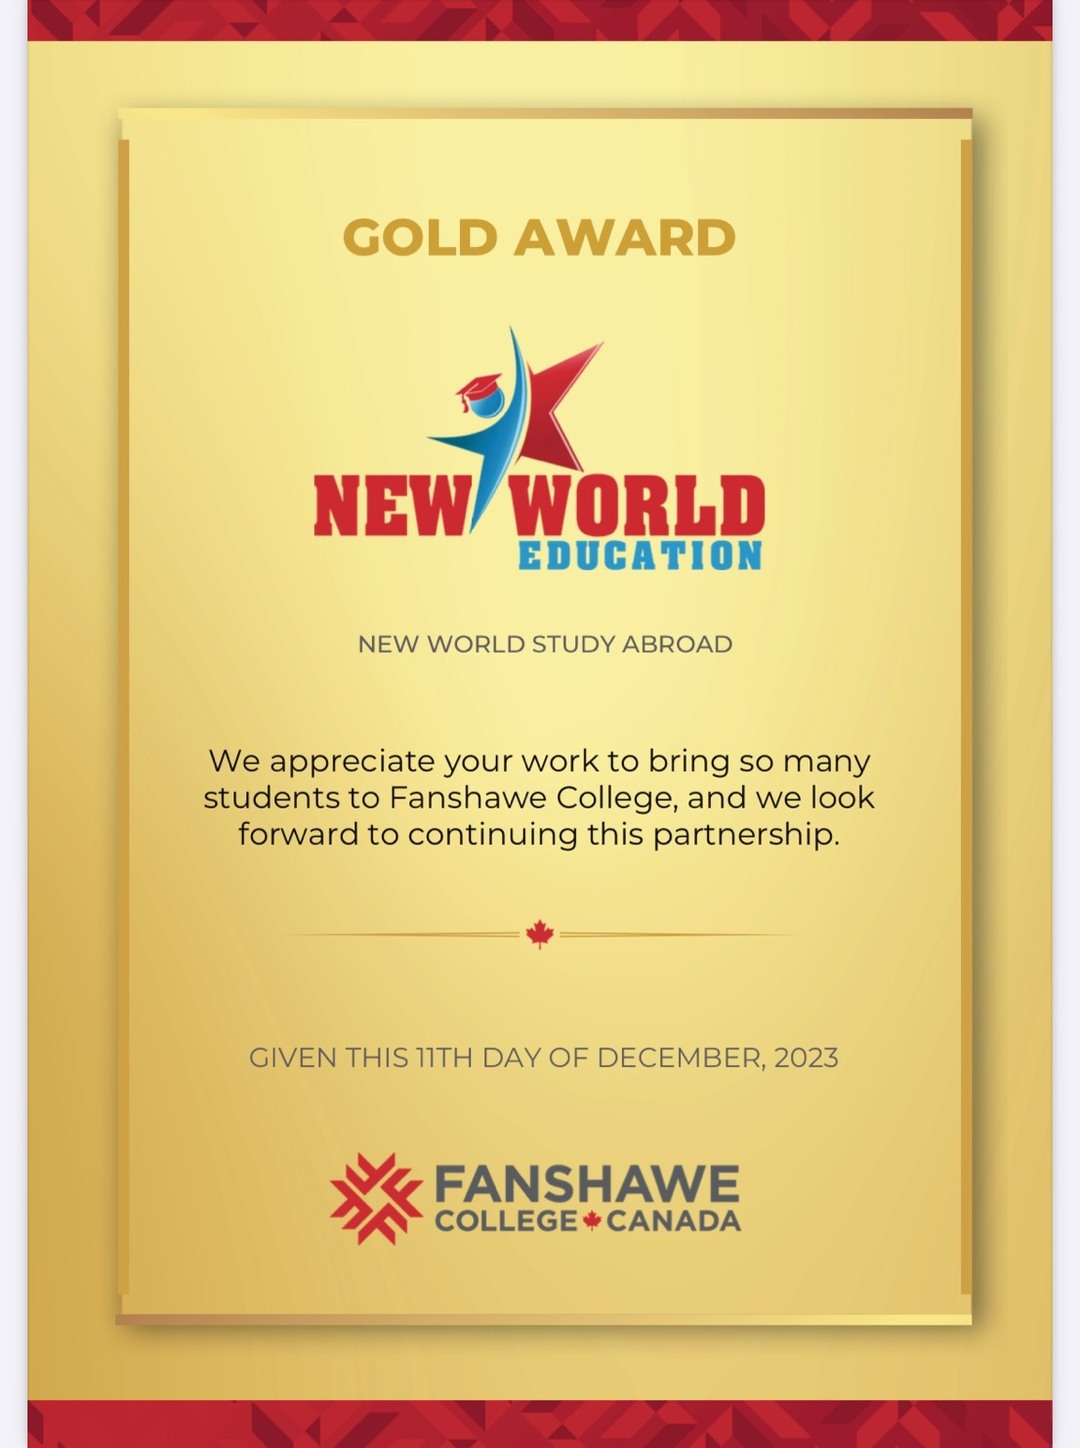 Gold Award 2023 from Fanshawe College, Canada